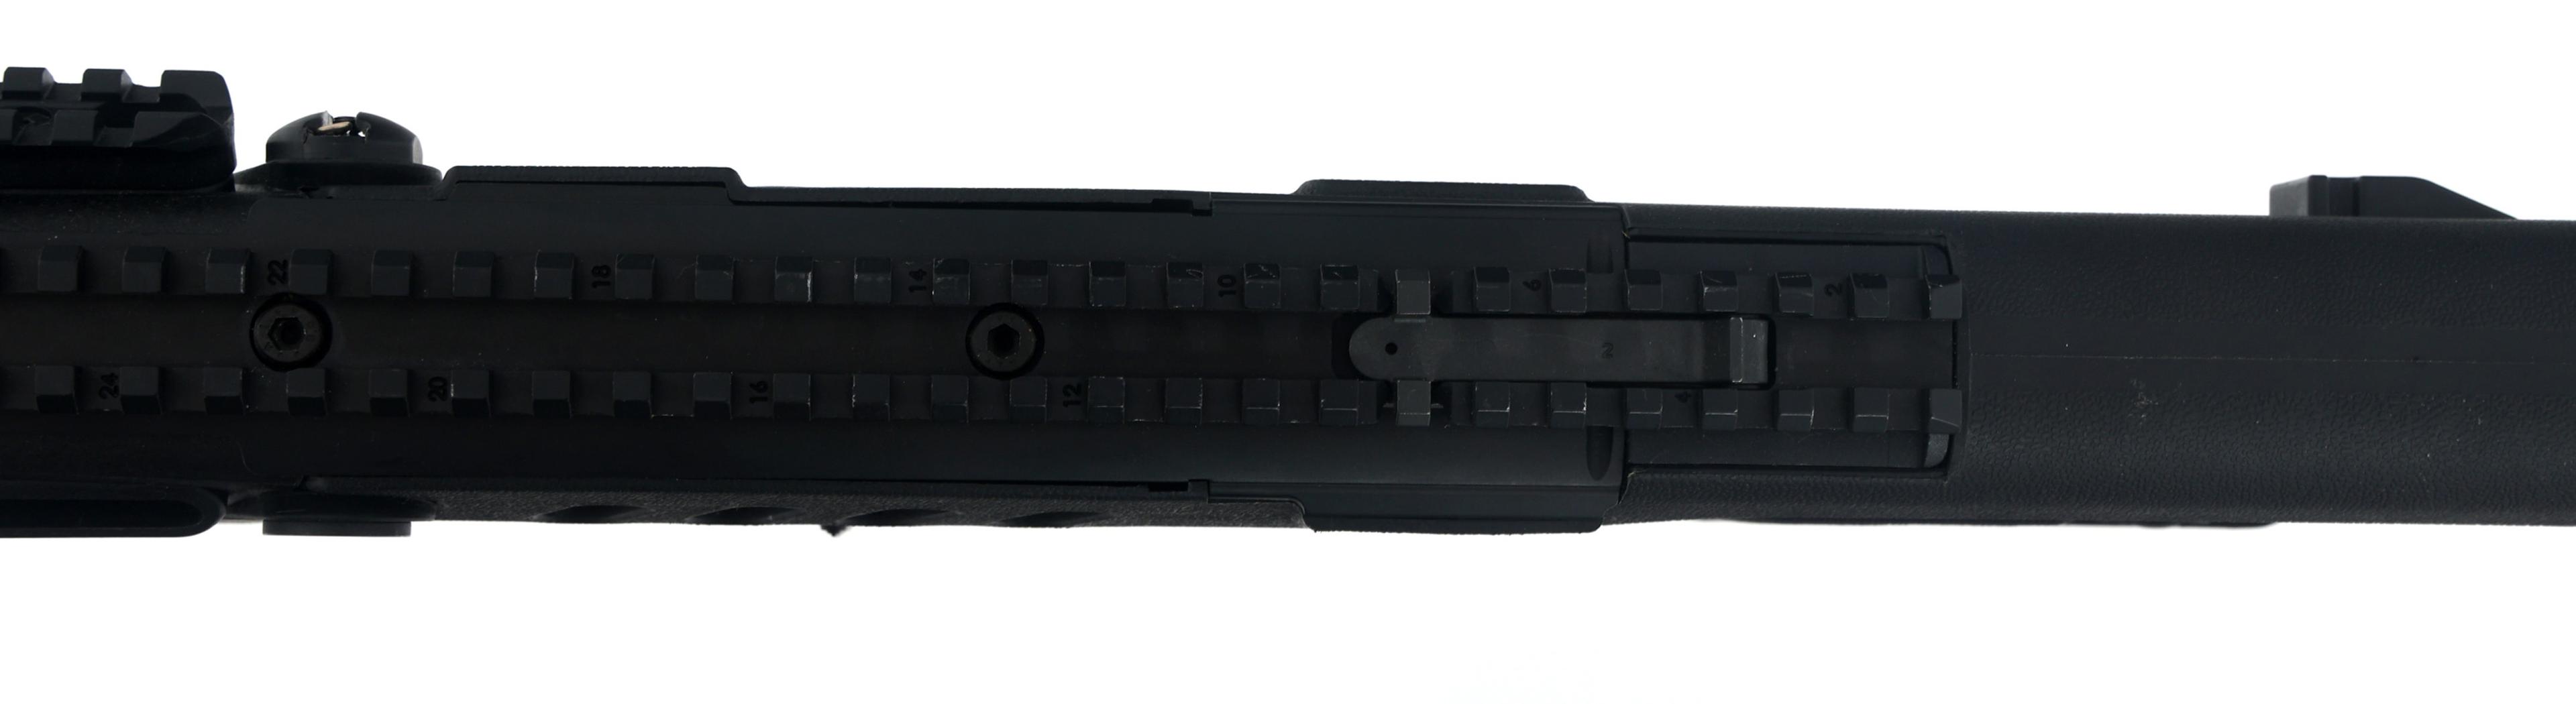 IWI MODEL TAVOR SAR 5.56x45mm CALIBER RIFLE